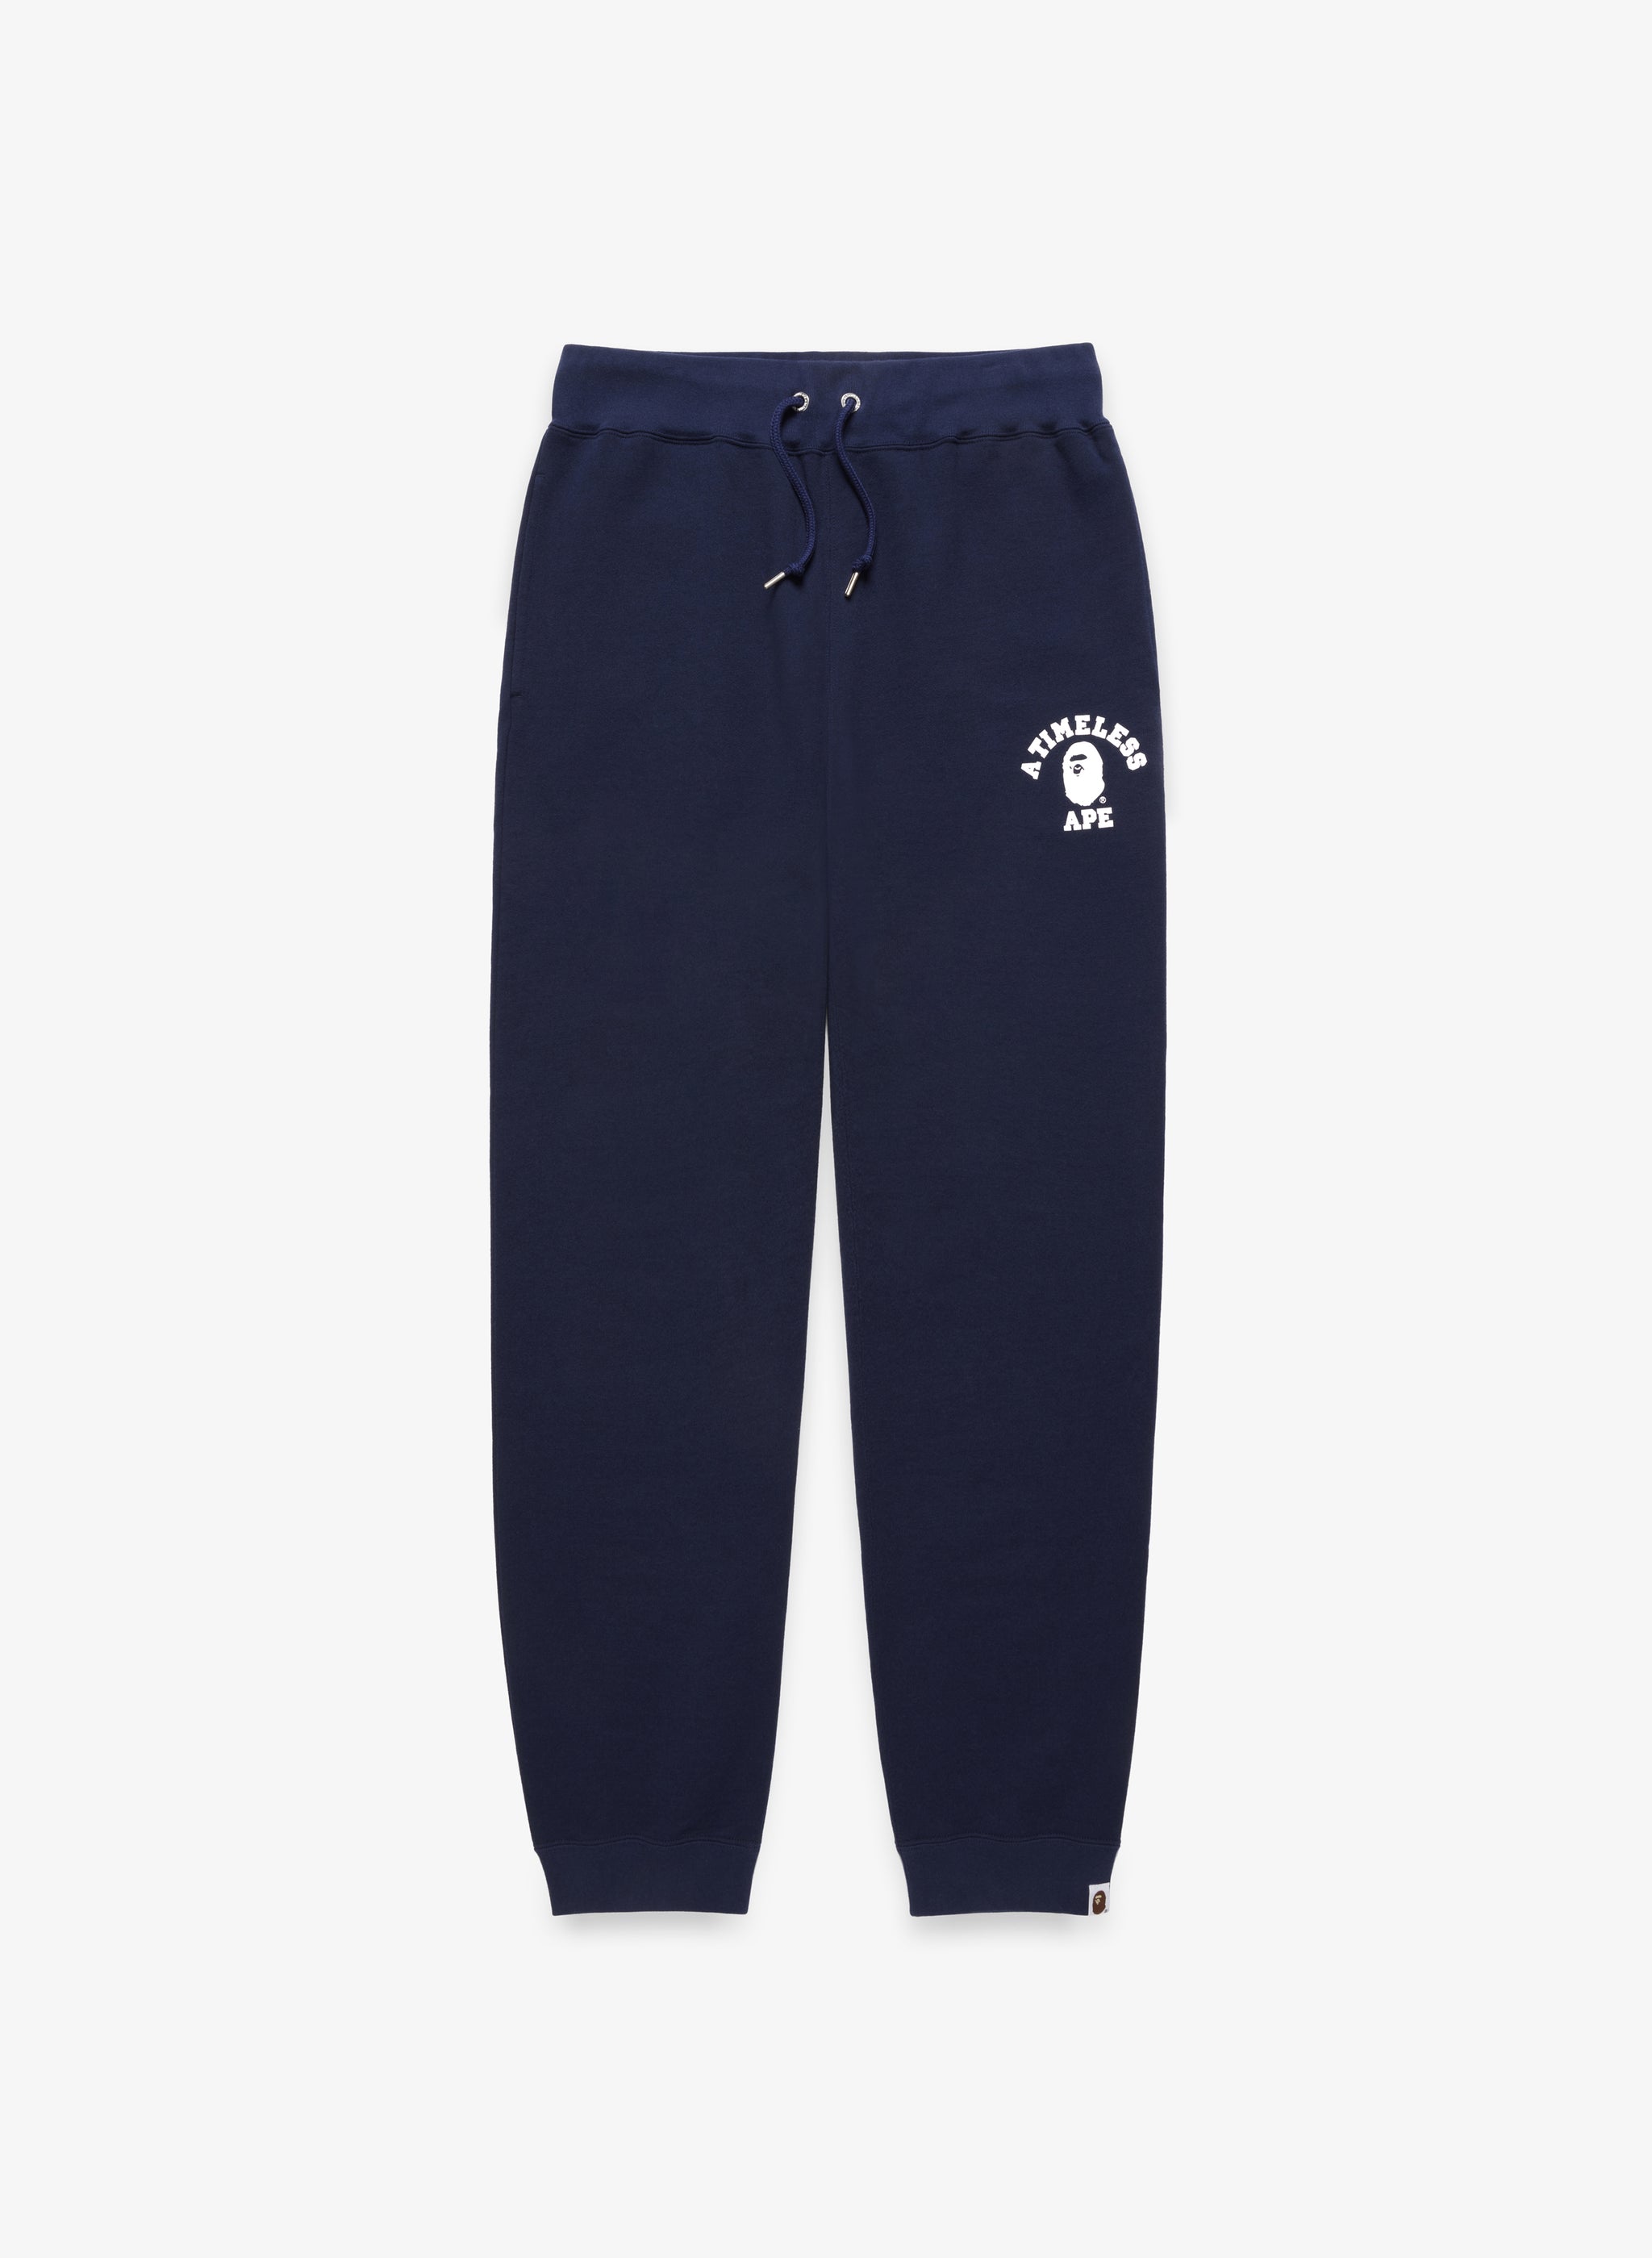 Bape® JJJJound Relaxed Sweatpants - Navy